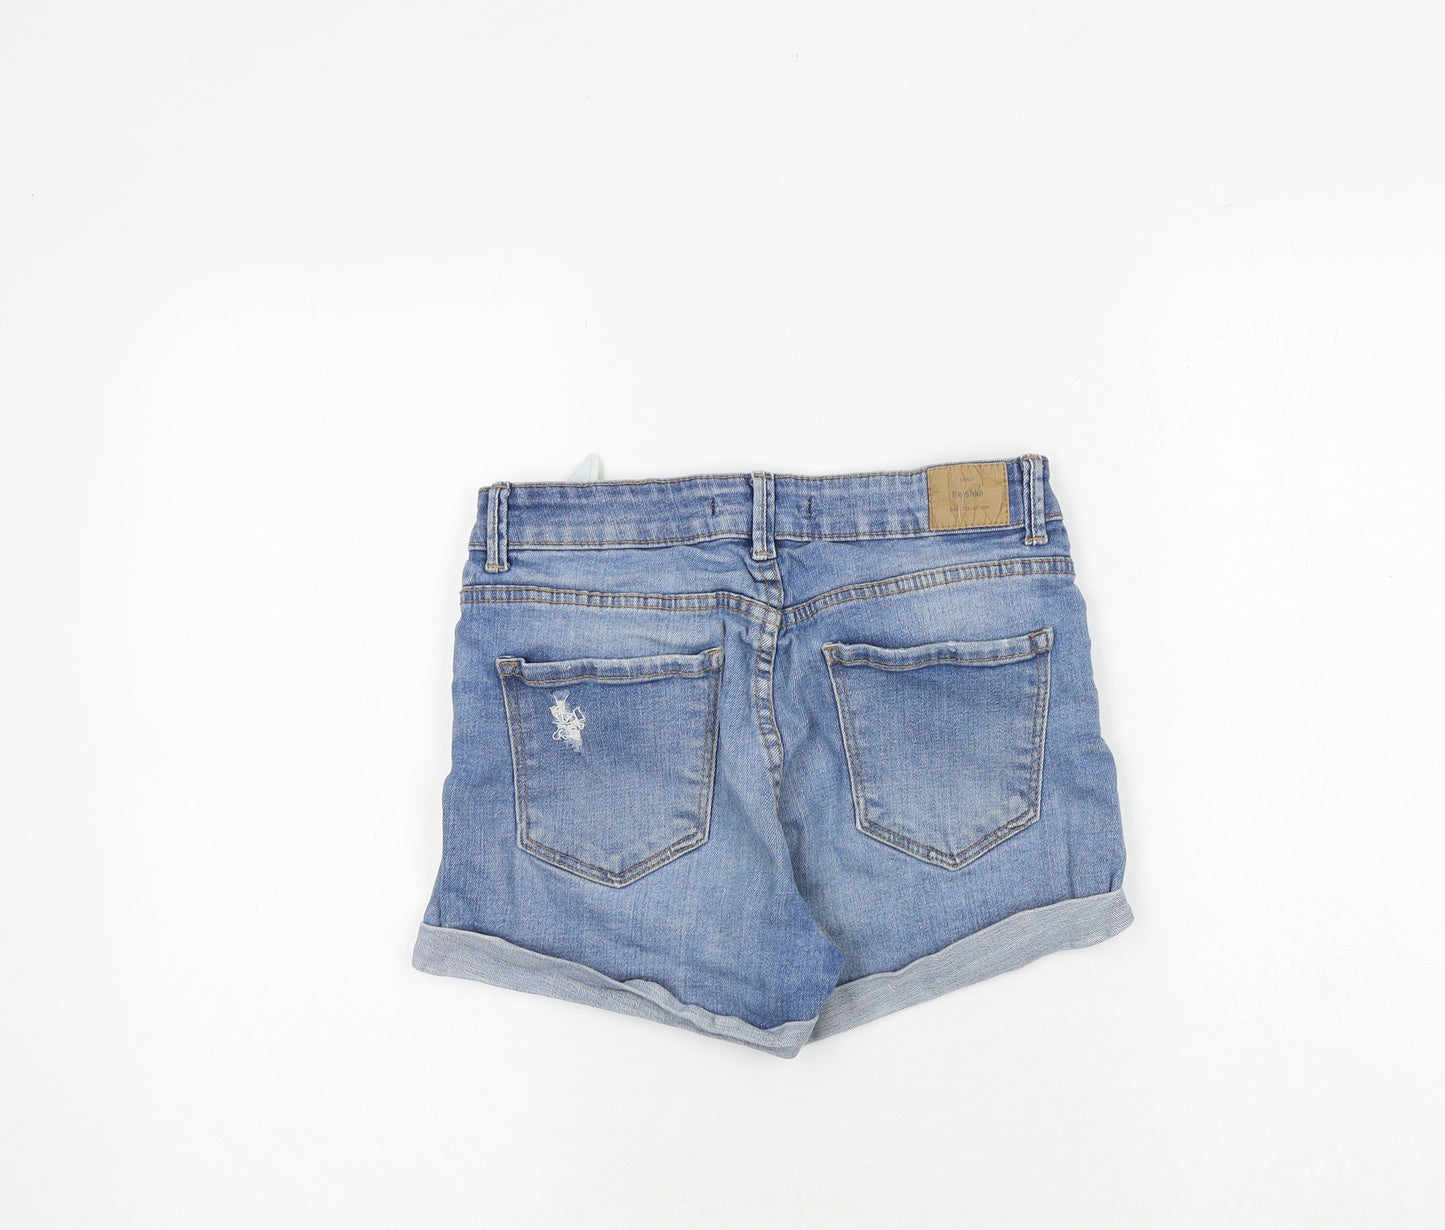 Bershka Womens Blue Cotton Hot Pants Shorts Size 10 Regular Zip - Distressed